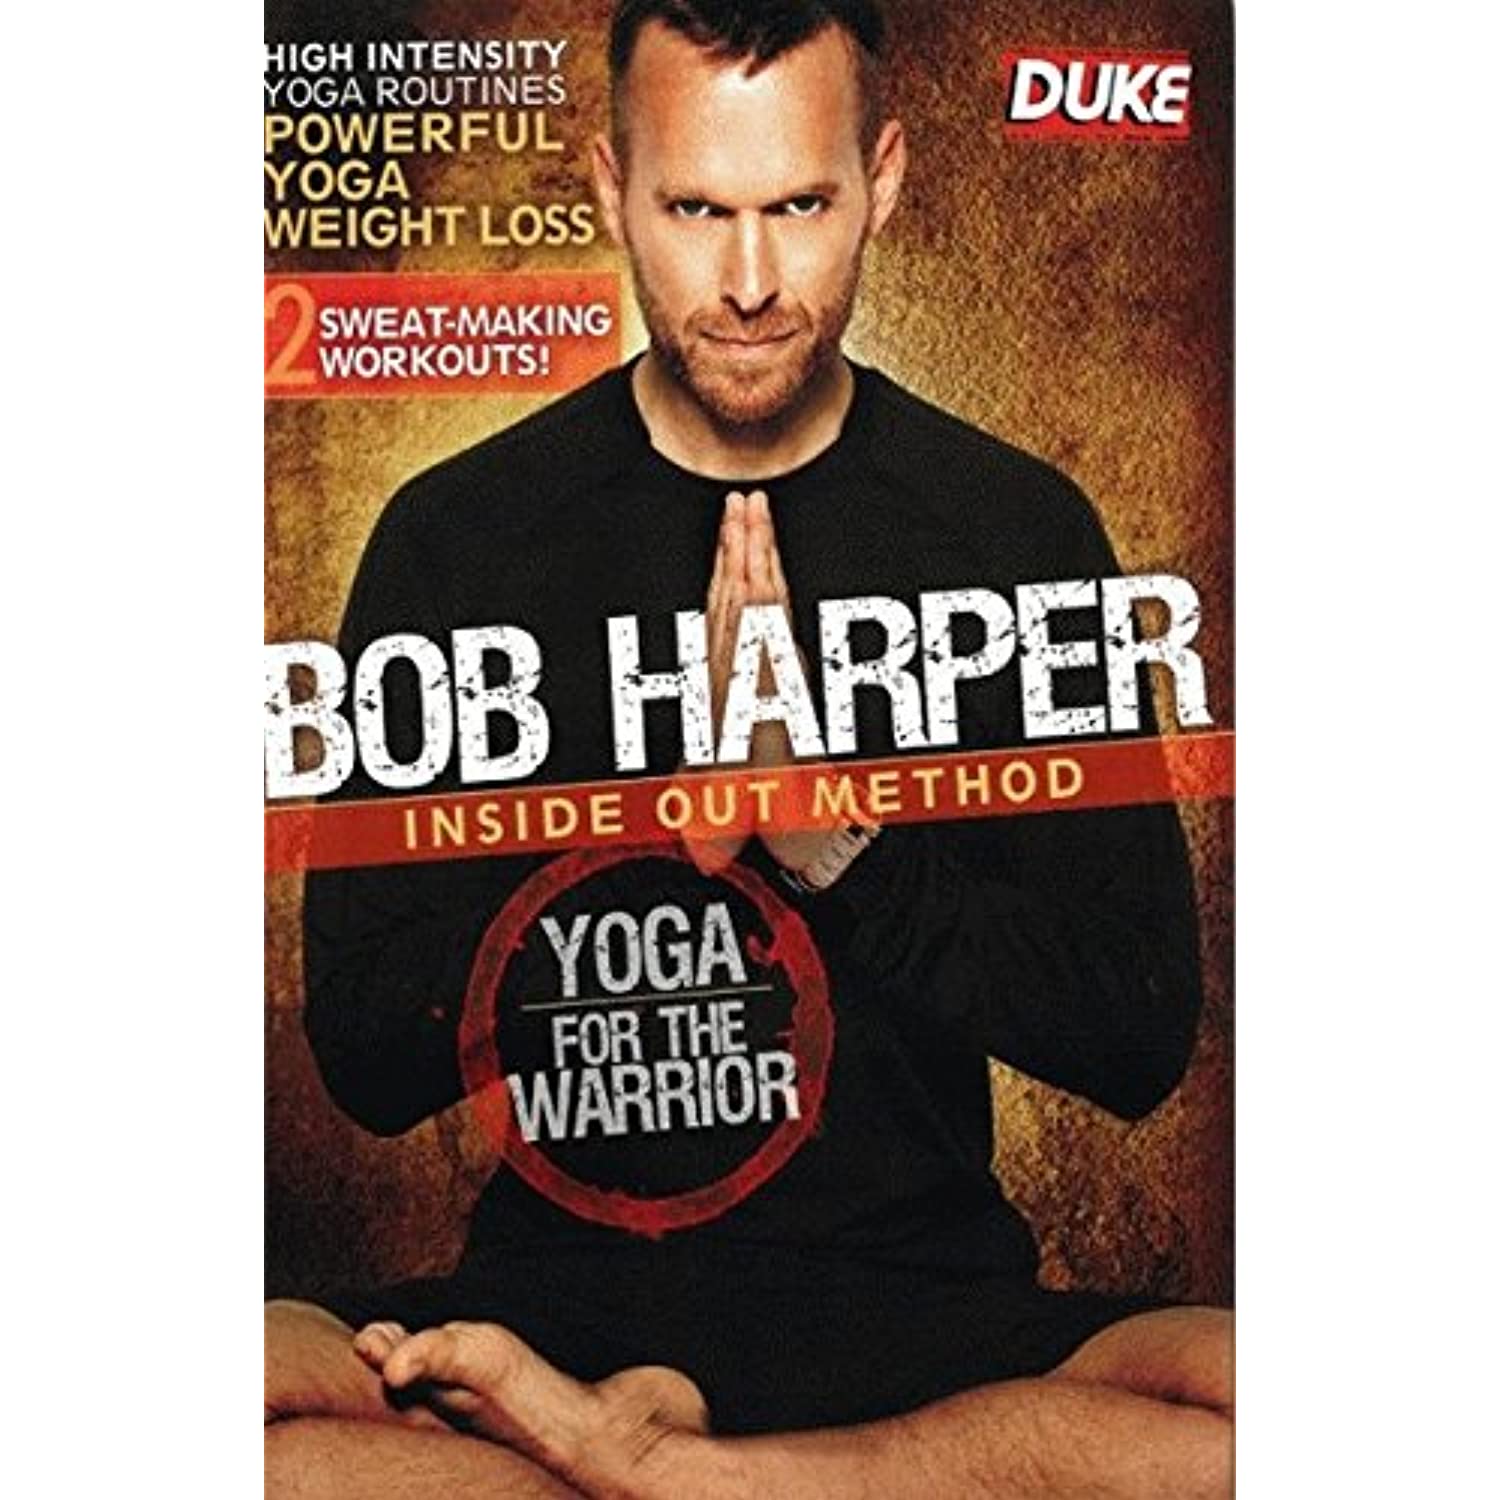 Bob Harper Inside Out Method Yoga For The Warrior DVD